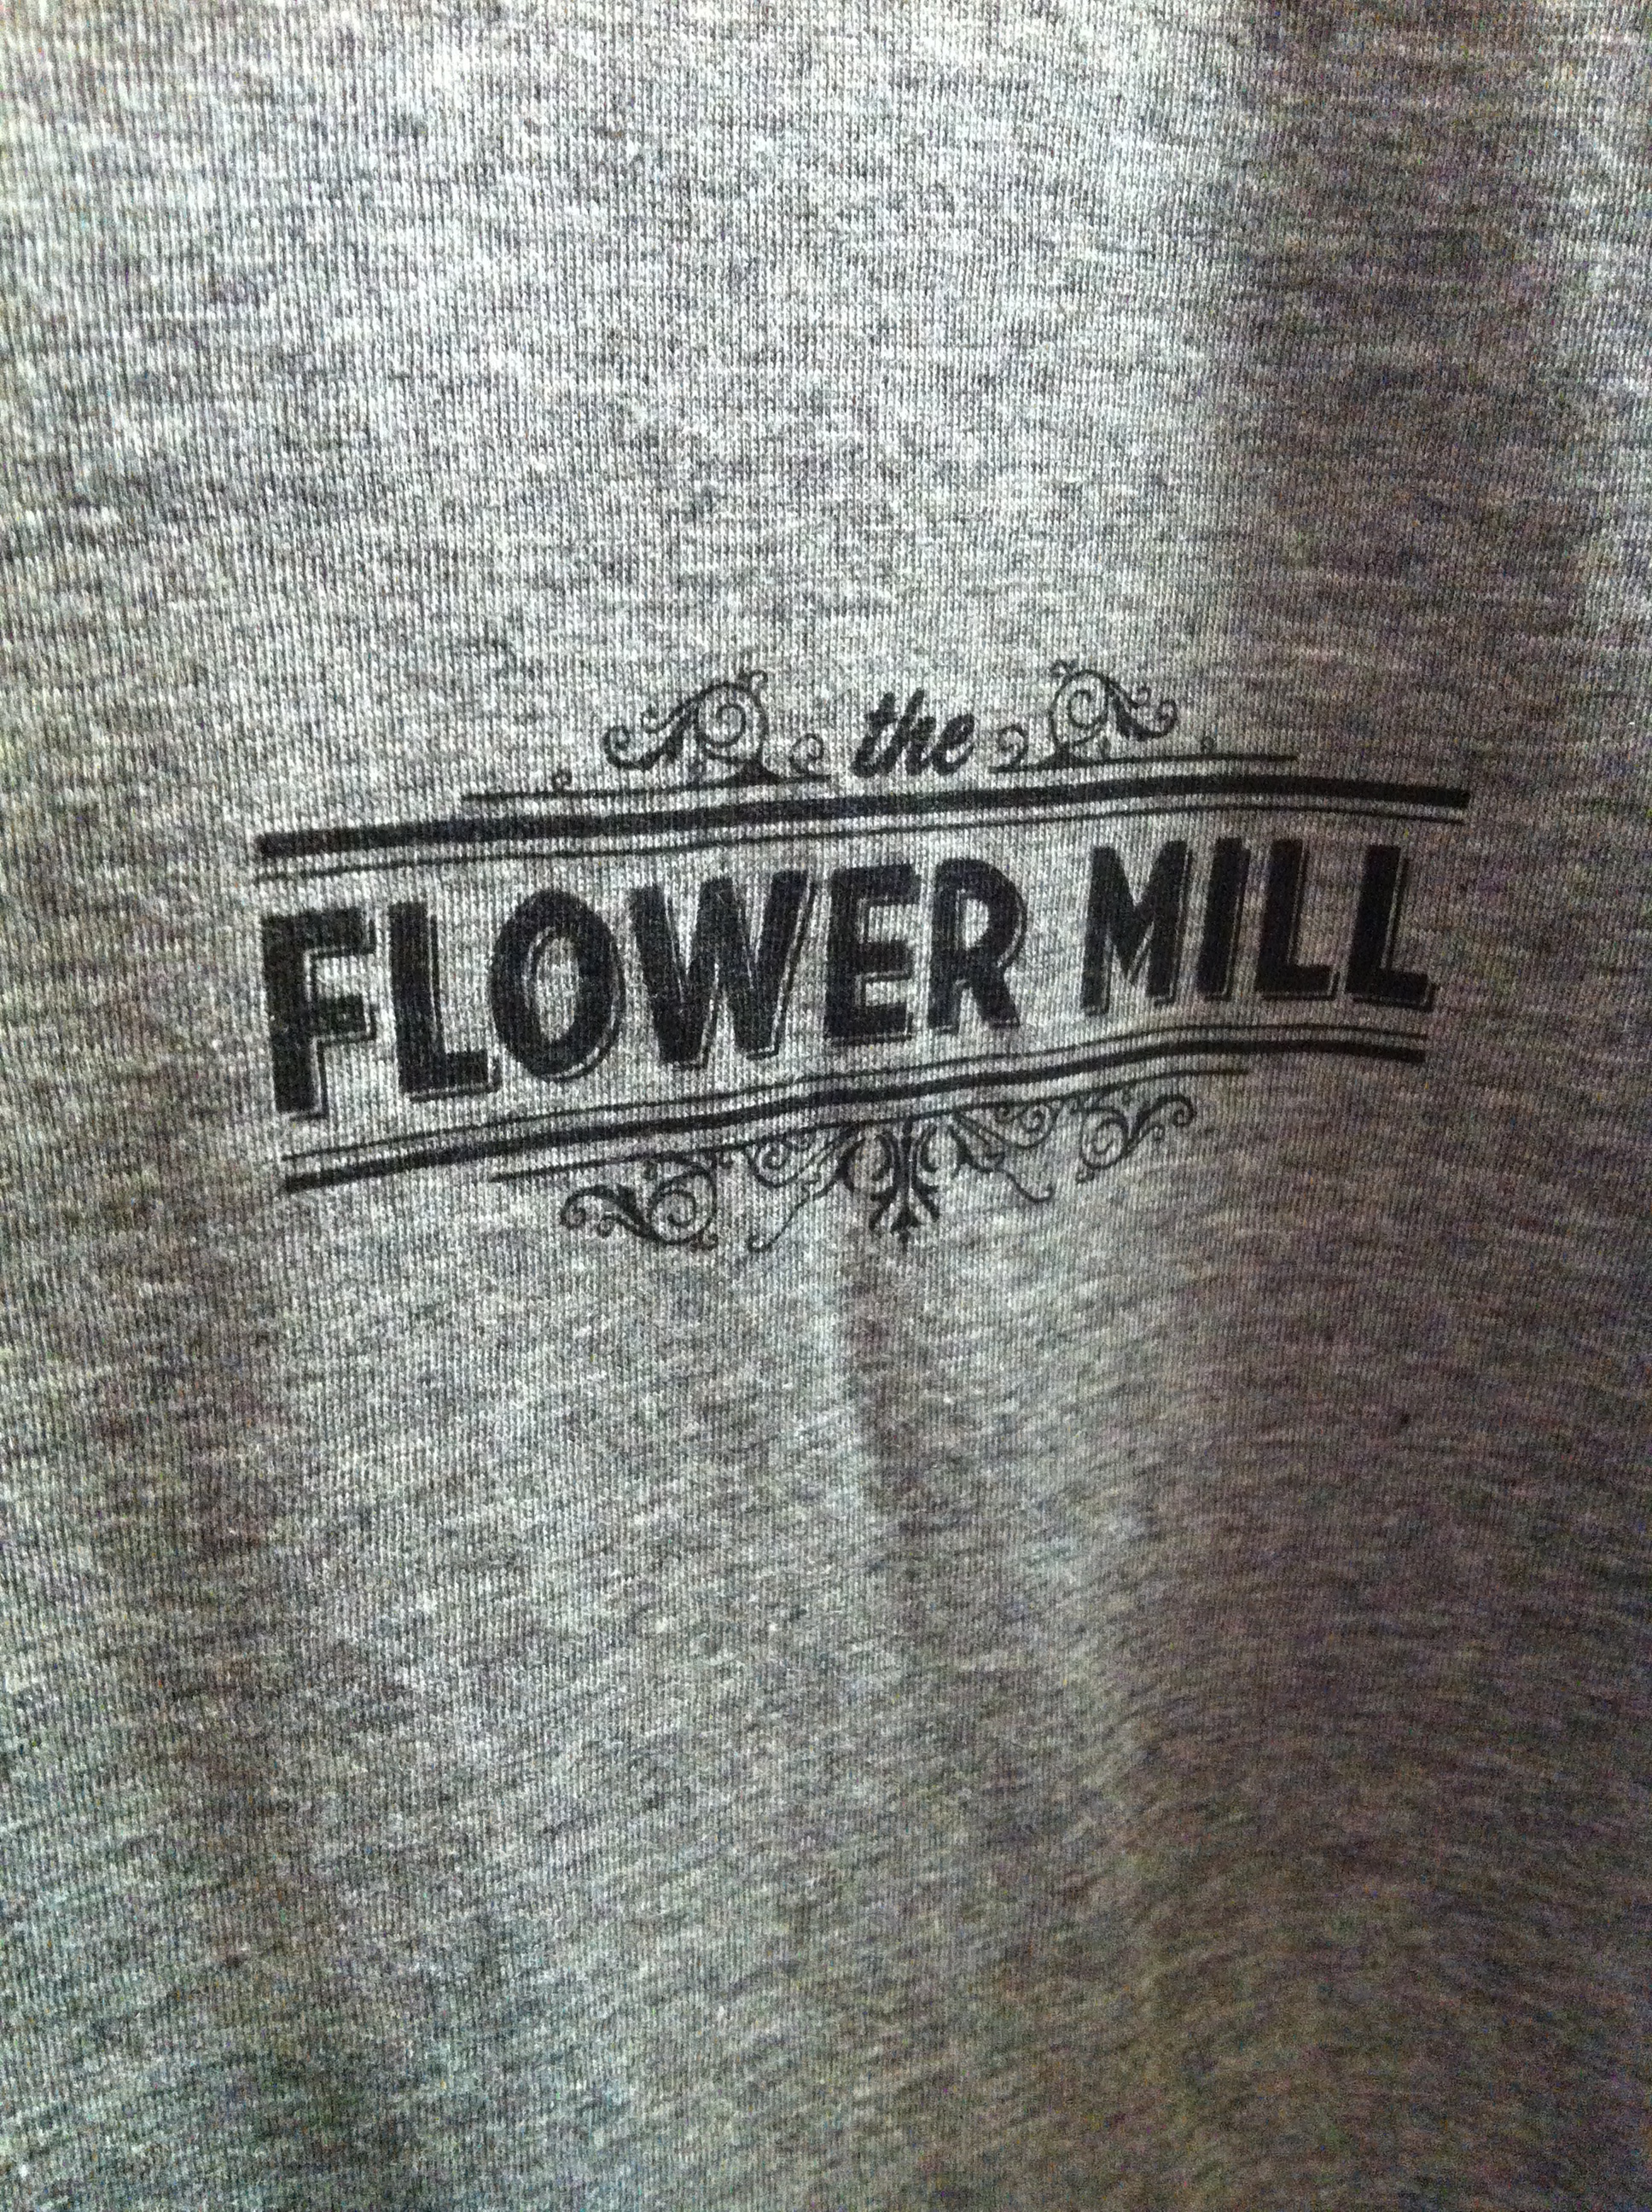 flowermill3.JPG